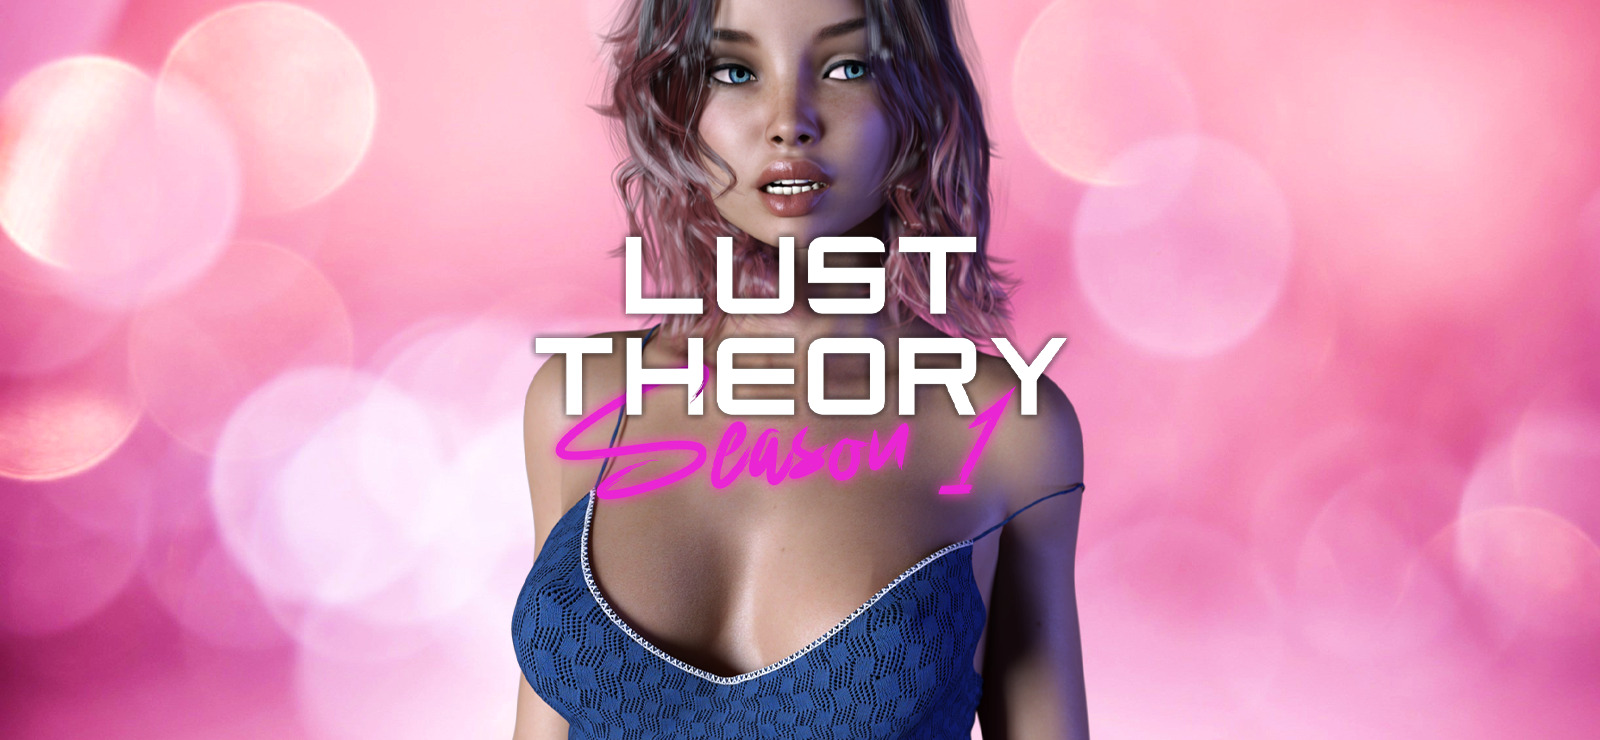 60% Lust Theory - Season 1 on GOG.com